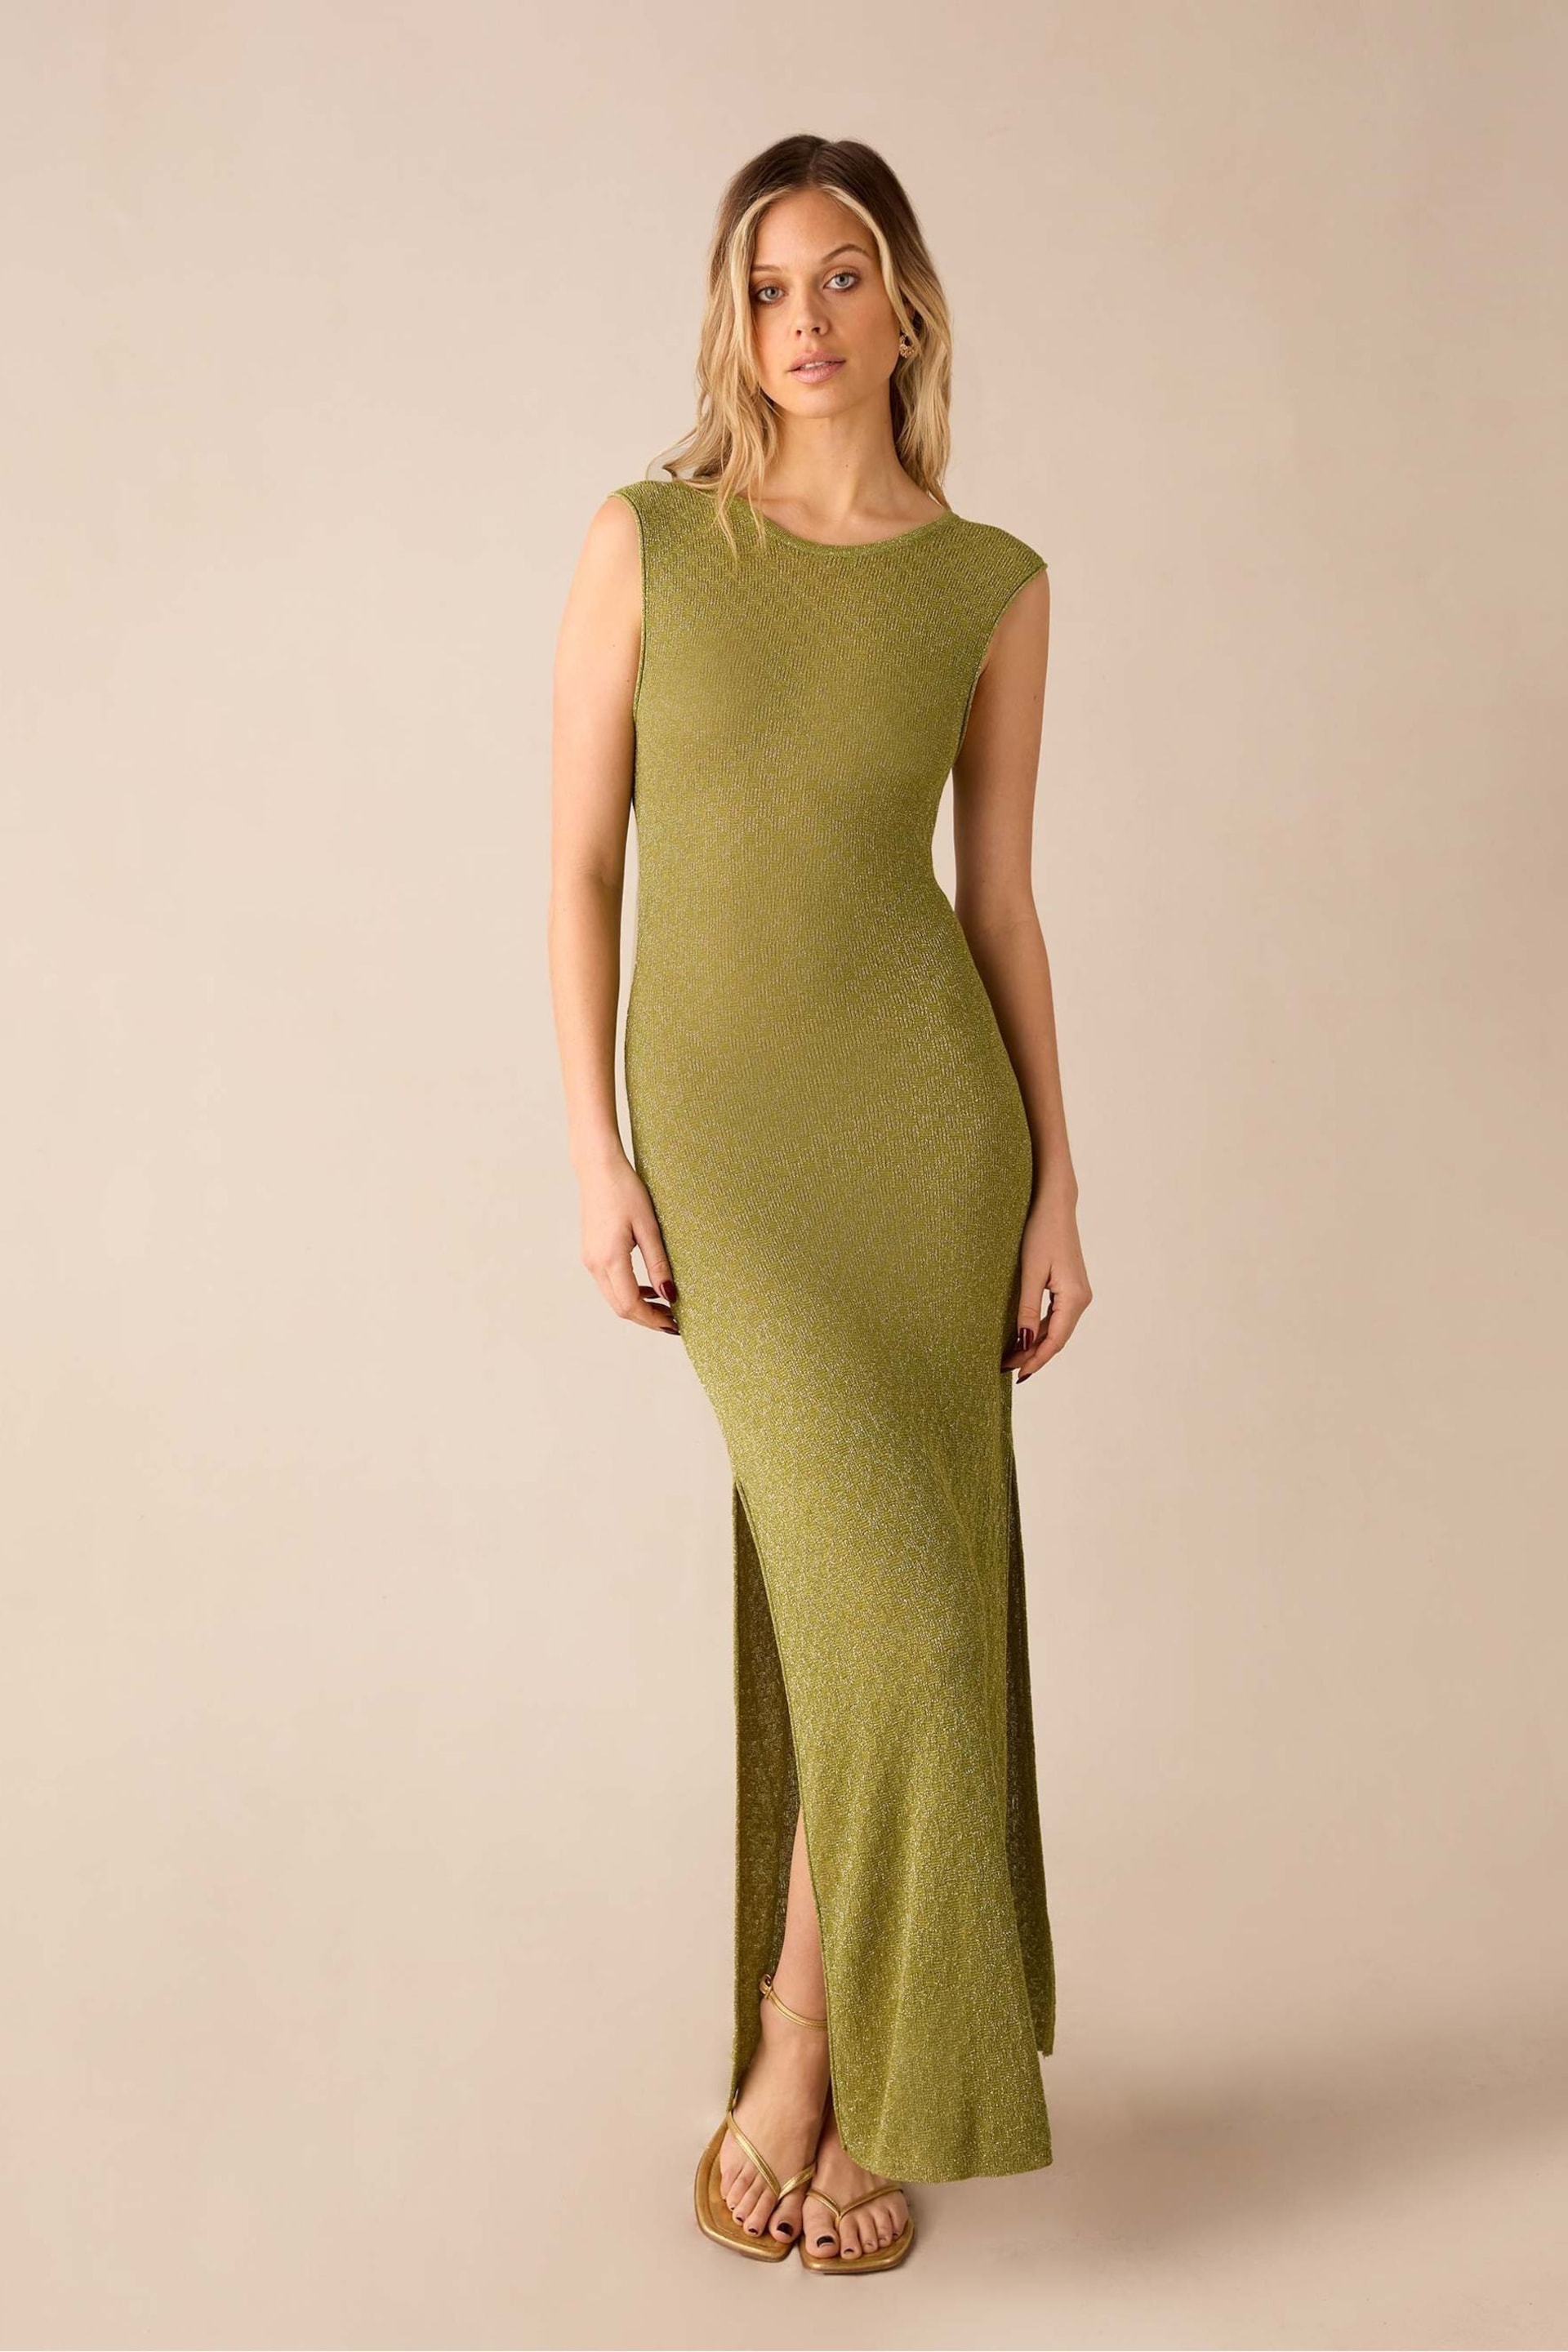 Ro&Zo Green Sheer Sparkle Knit Column Dress - Image 1 of 7